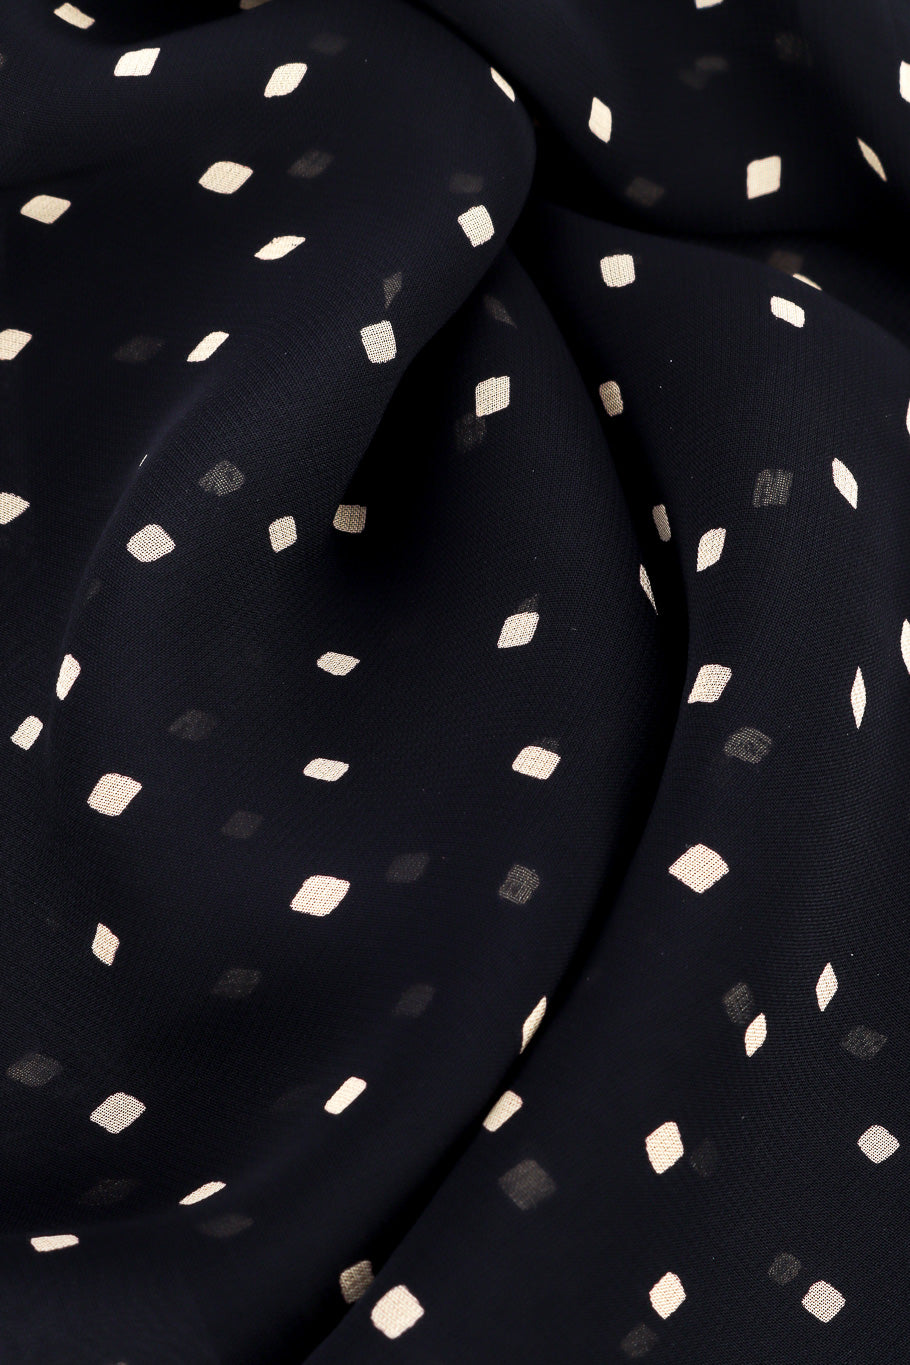 Donna Karan Diamond Dot Ruffle Dress diamond dot pattern closeup @Recessla